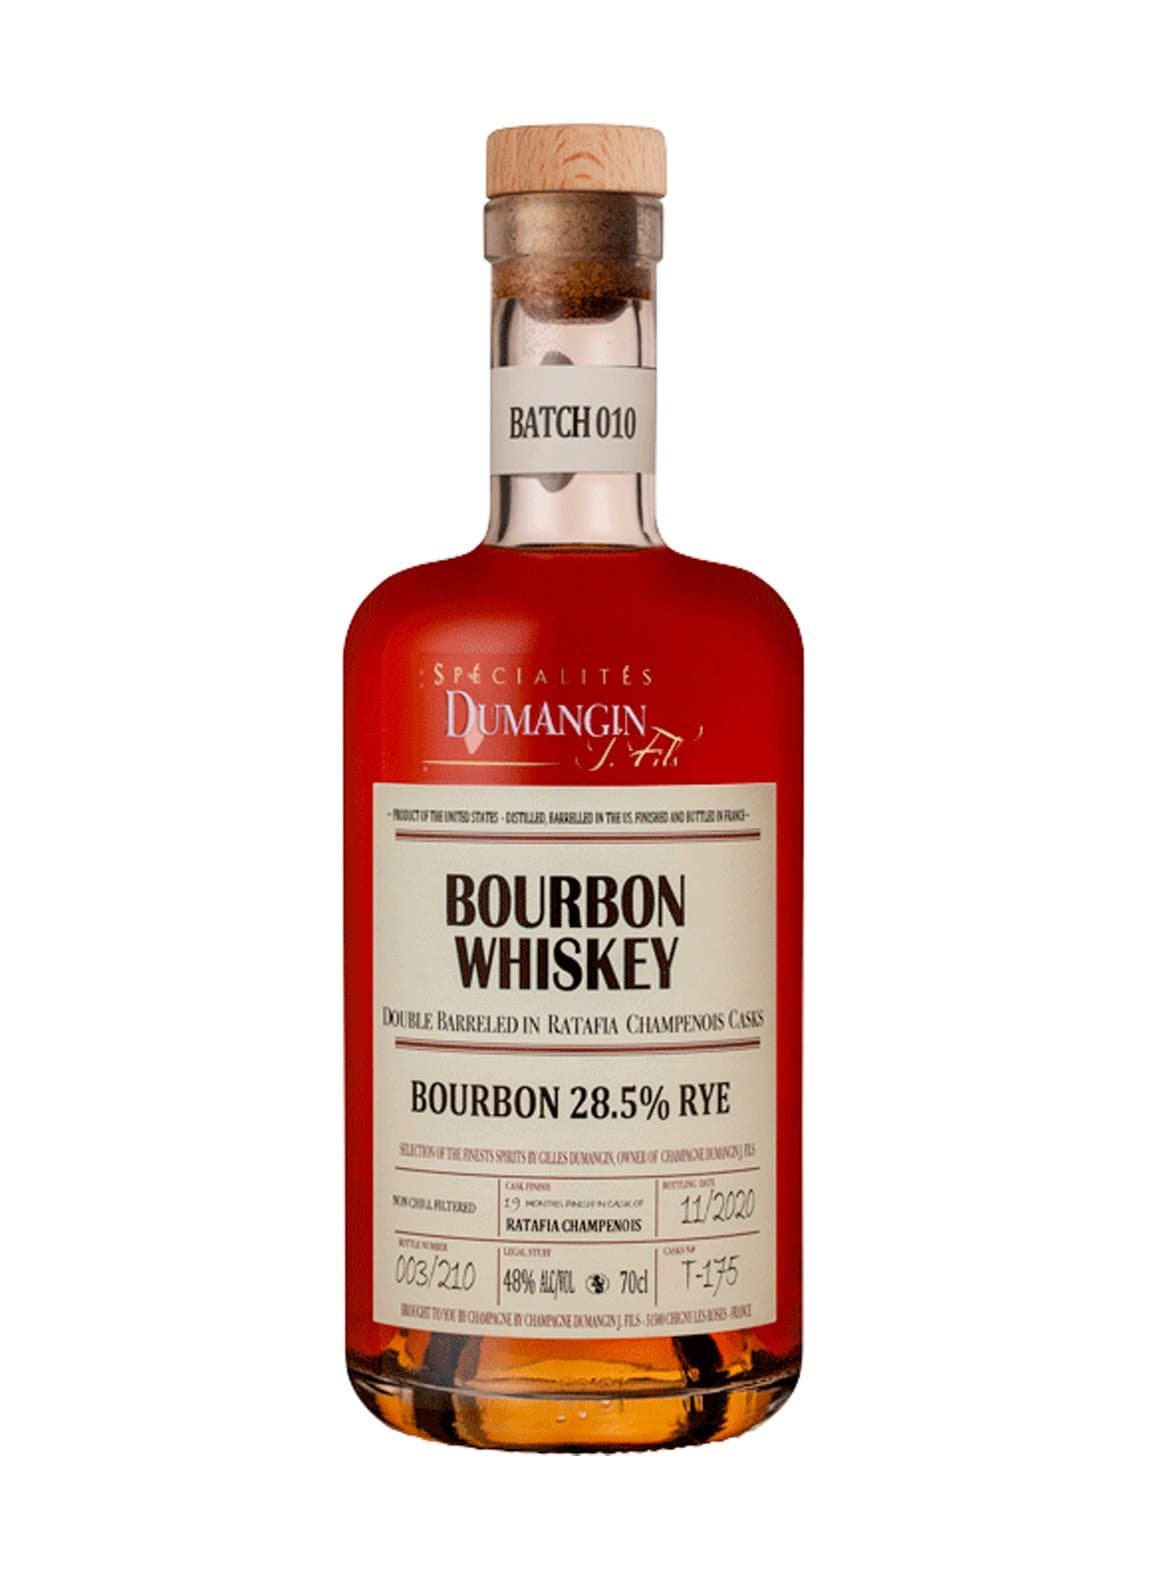 Dumangin Batch 010 Bourbon Whiskey 48% 700ml | Whiskey | Shop online at Spirits of France